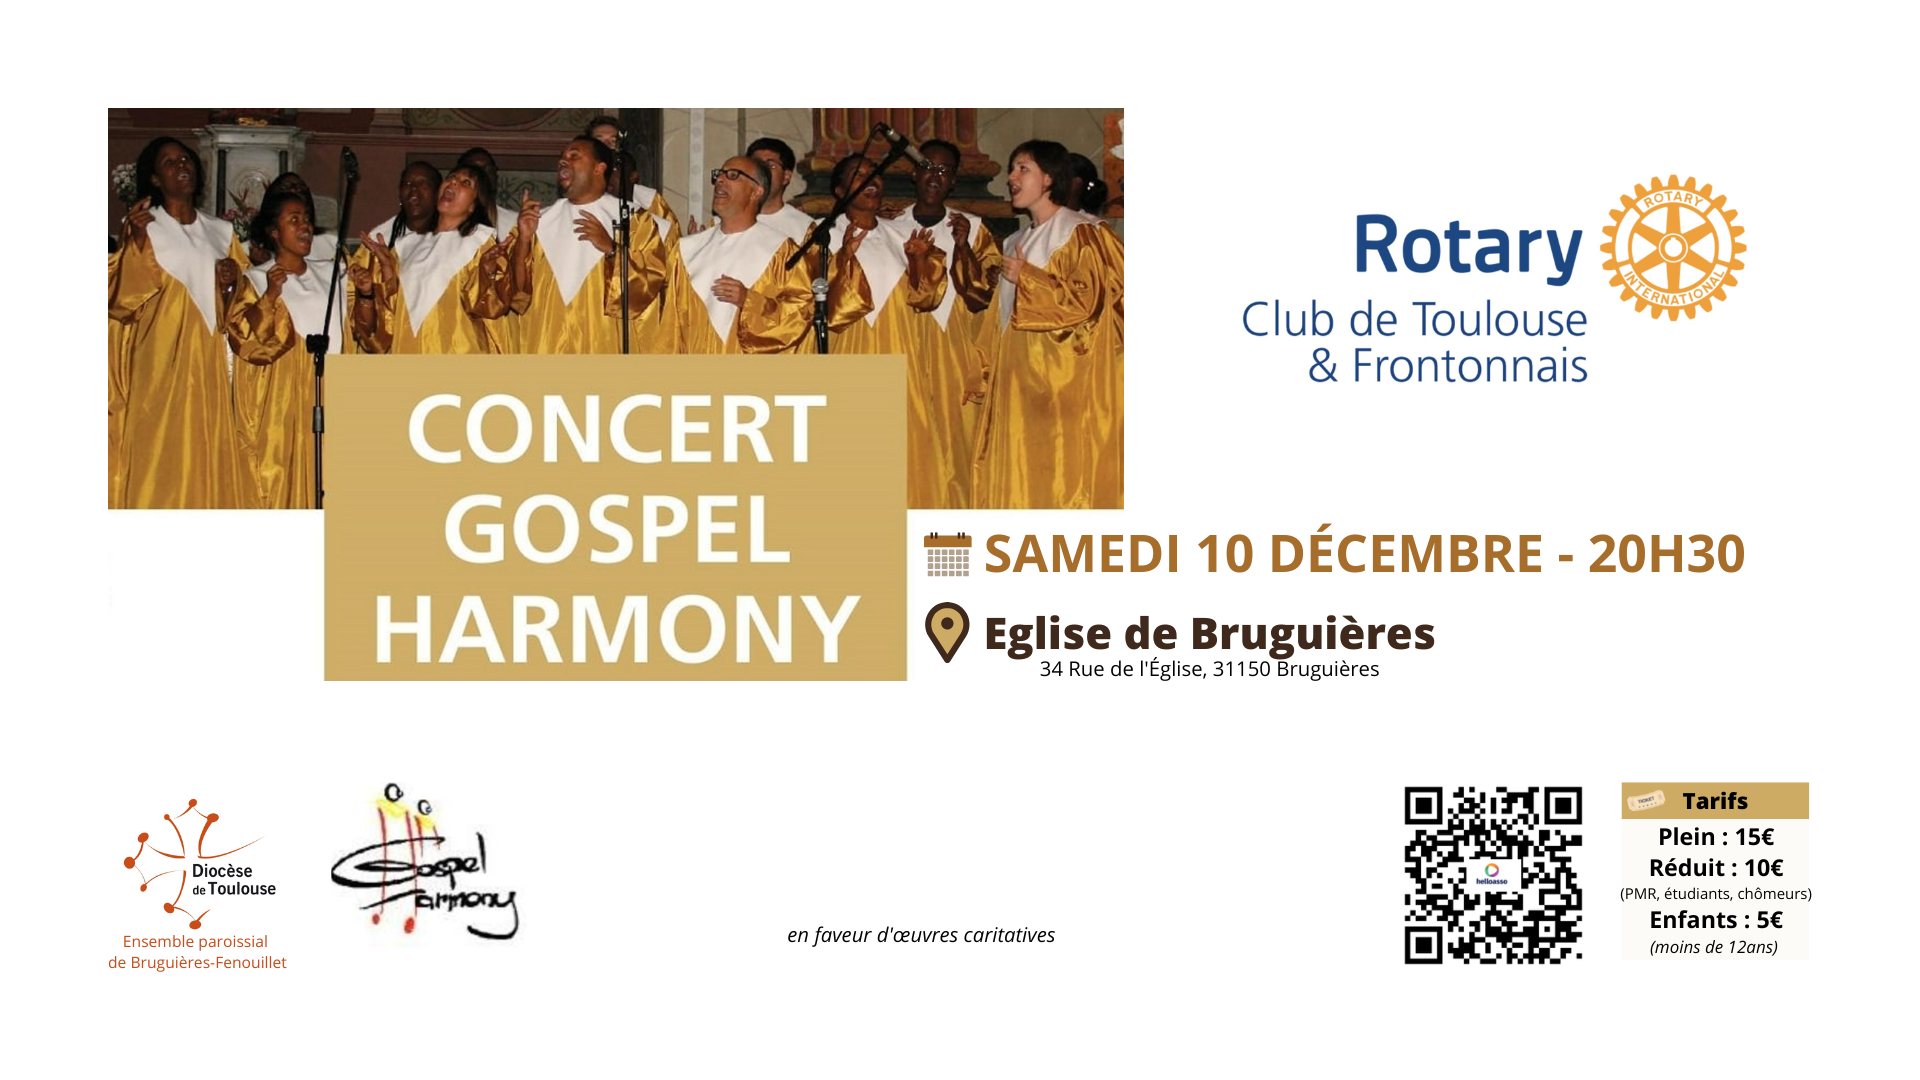 Concert Gospel Harmony en l'Eglise de Bruguières le 10/12/22